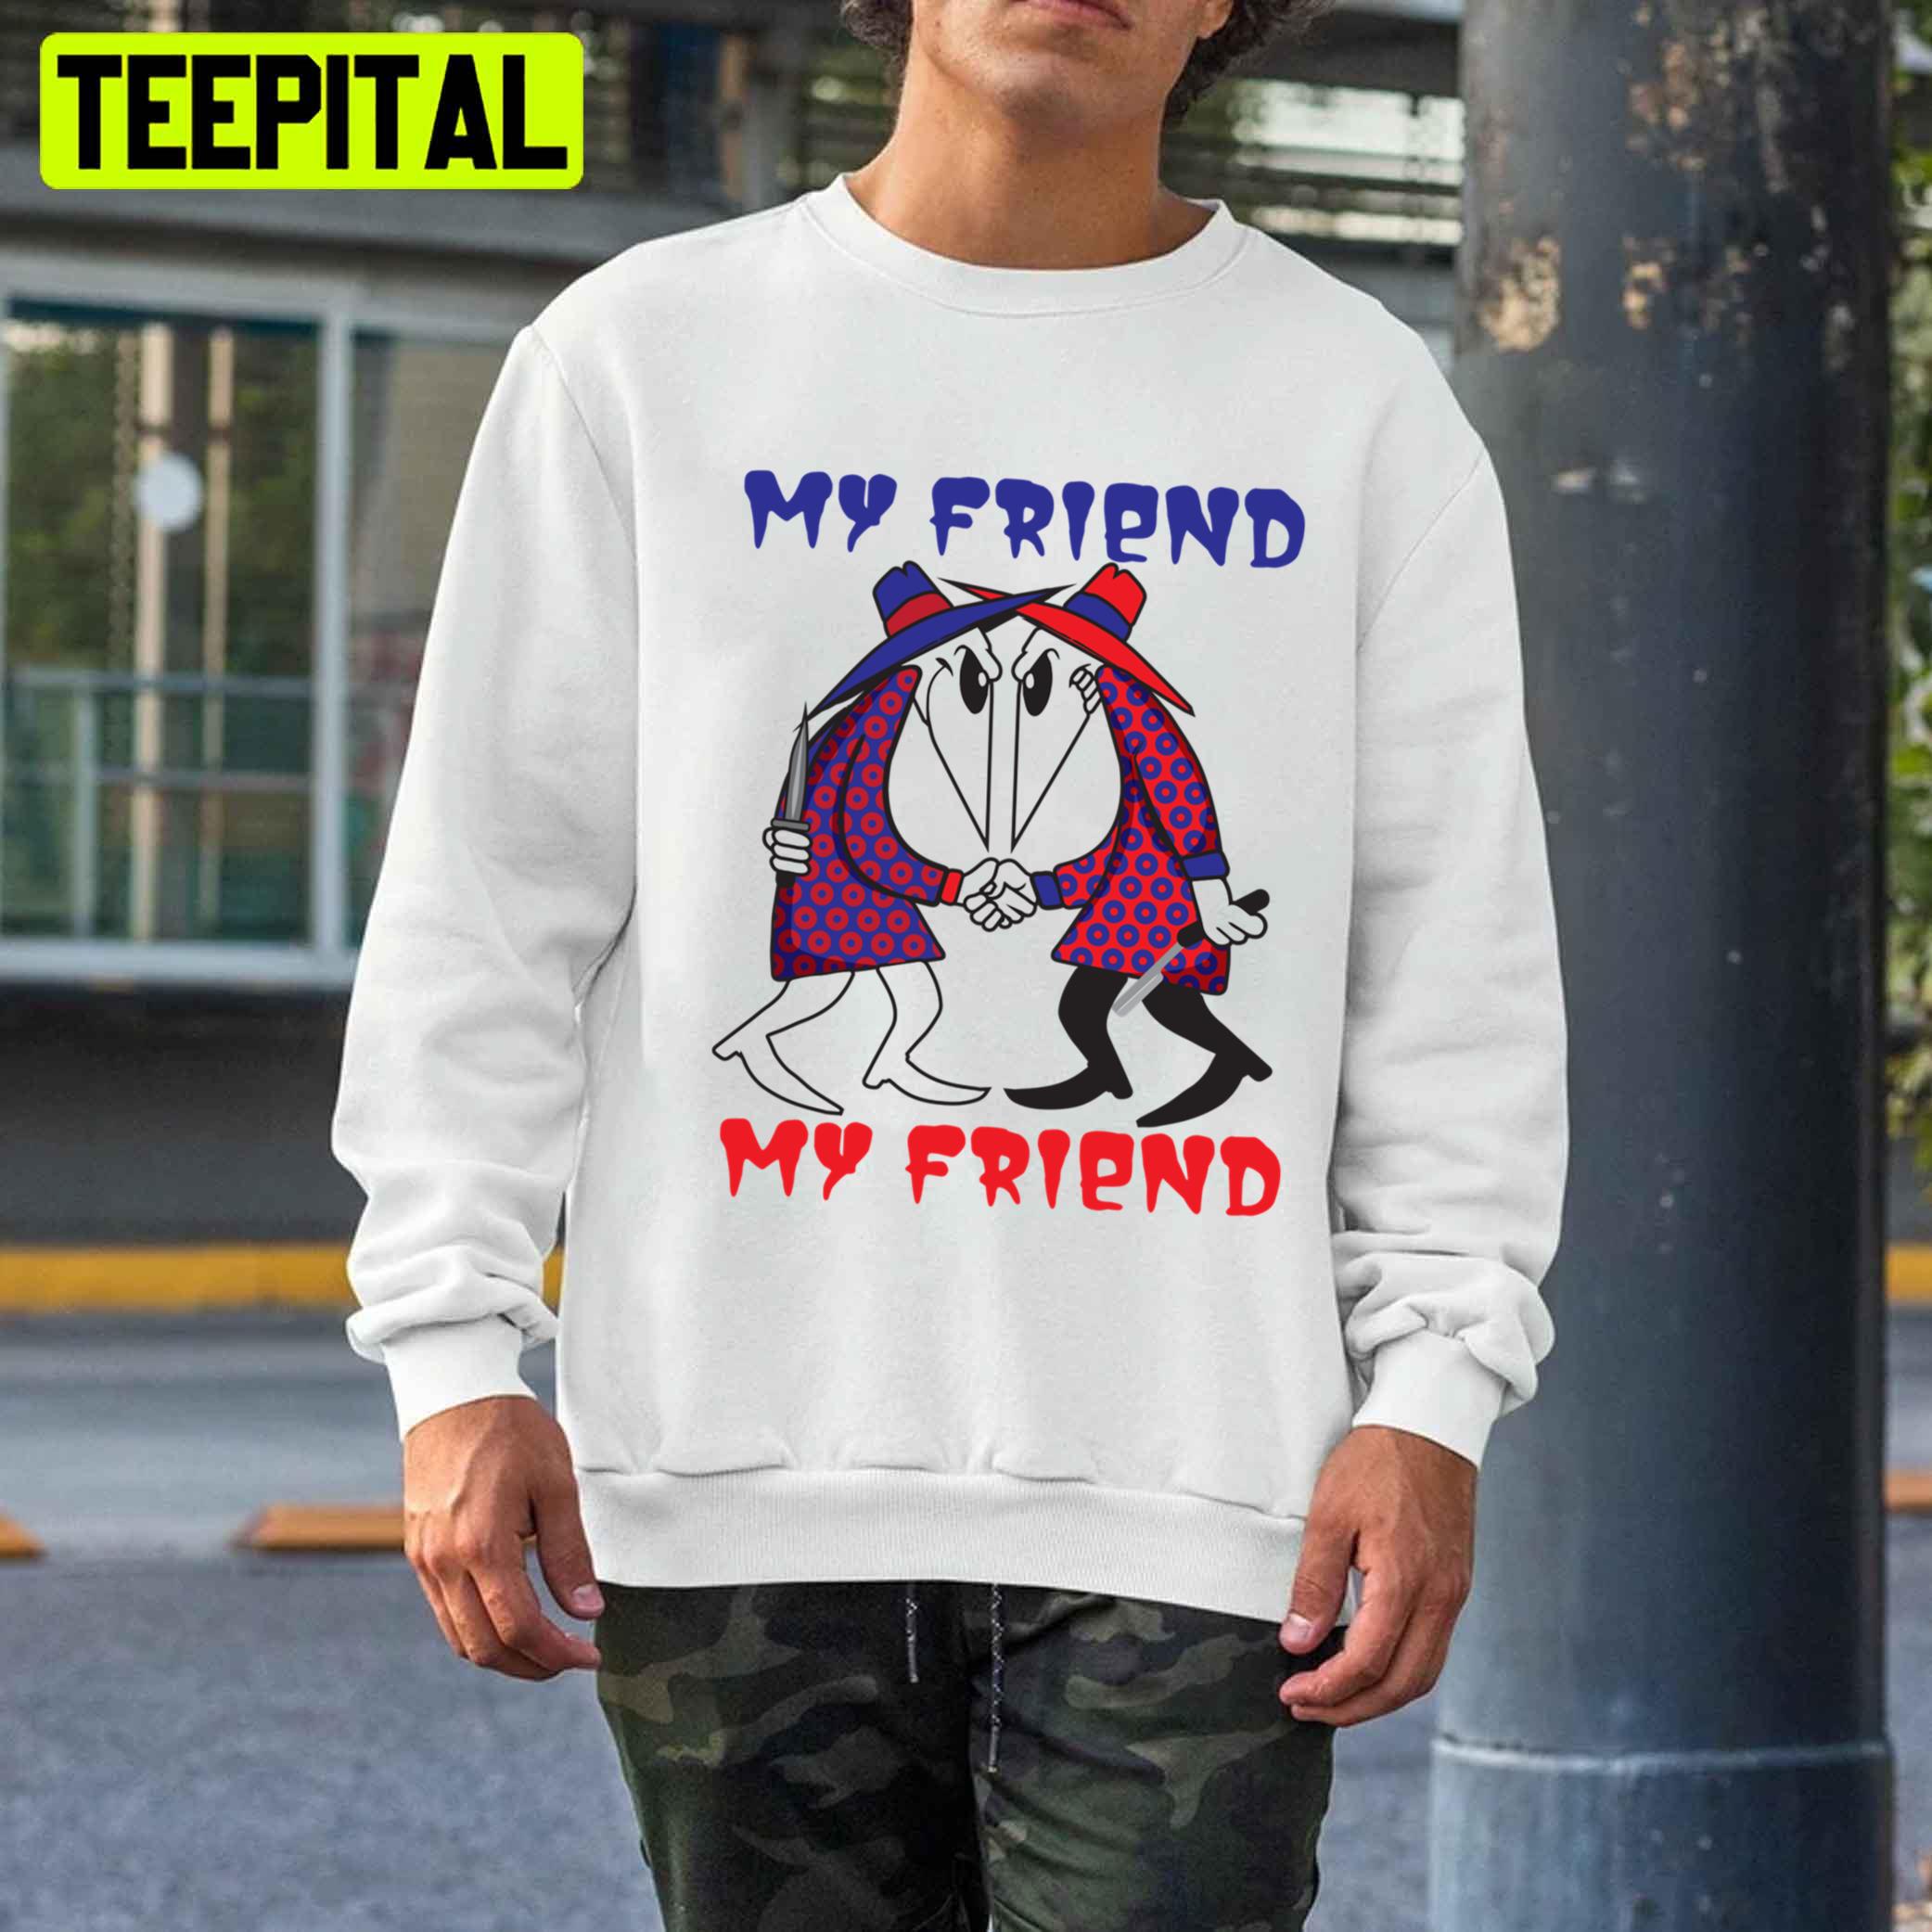 My Friend My Friend Unisex T-Shirt